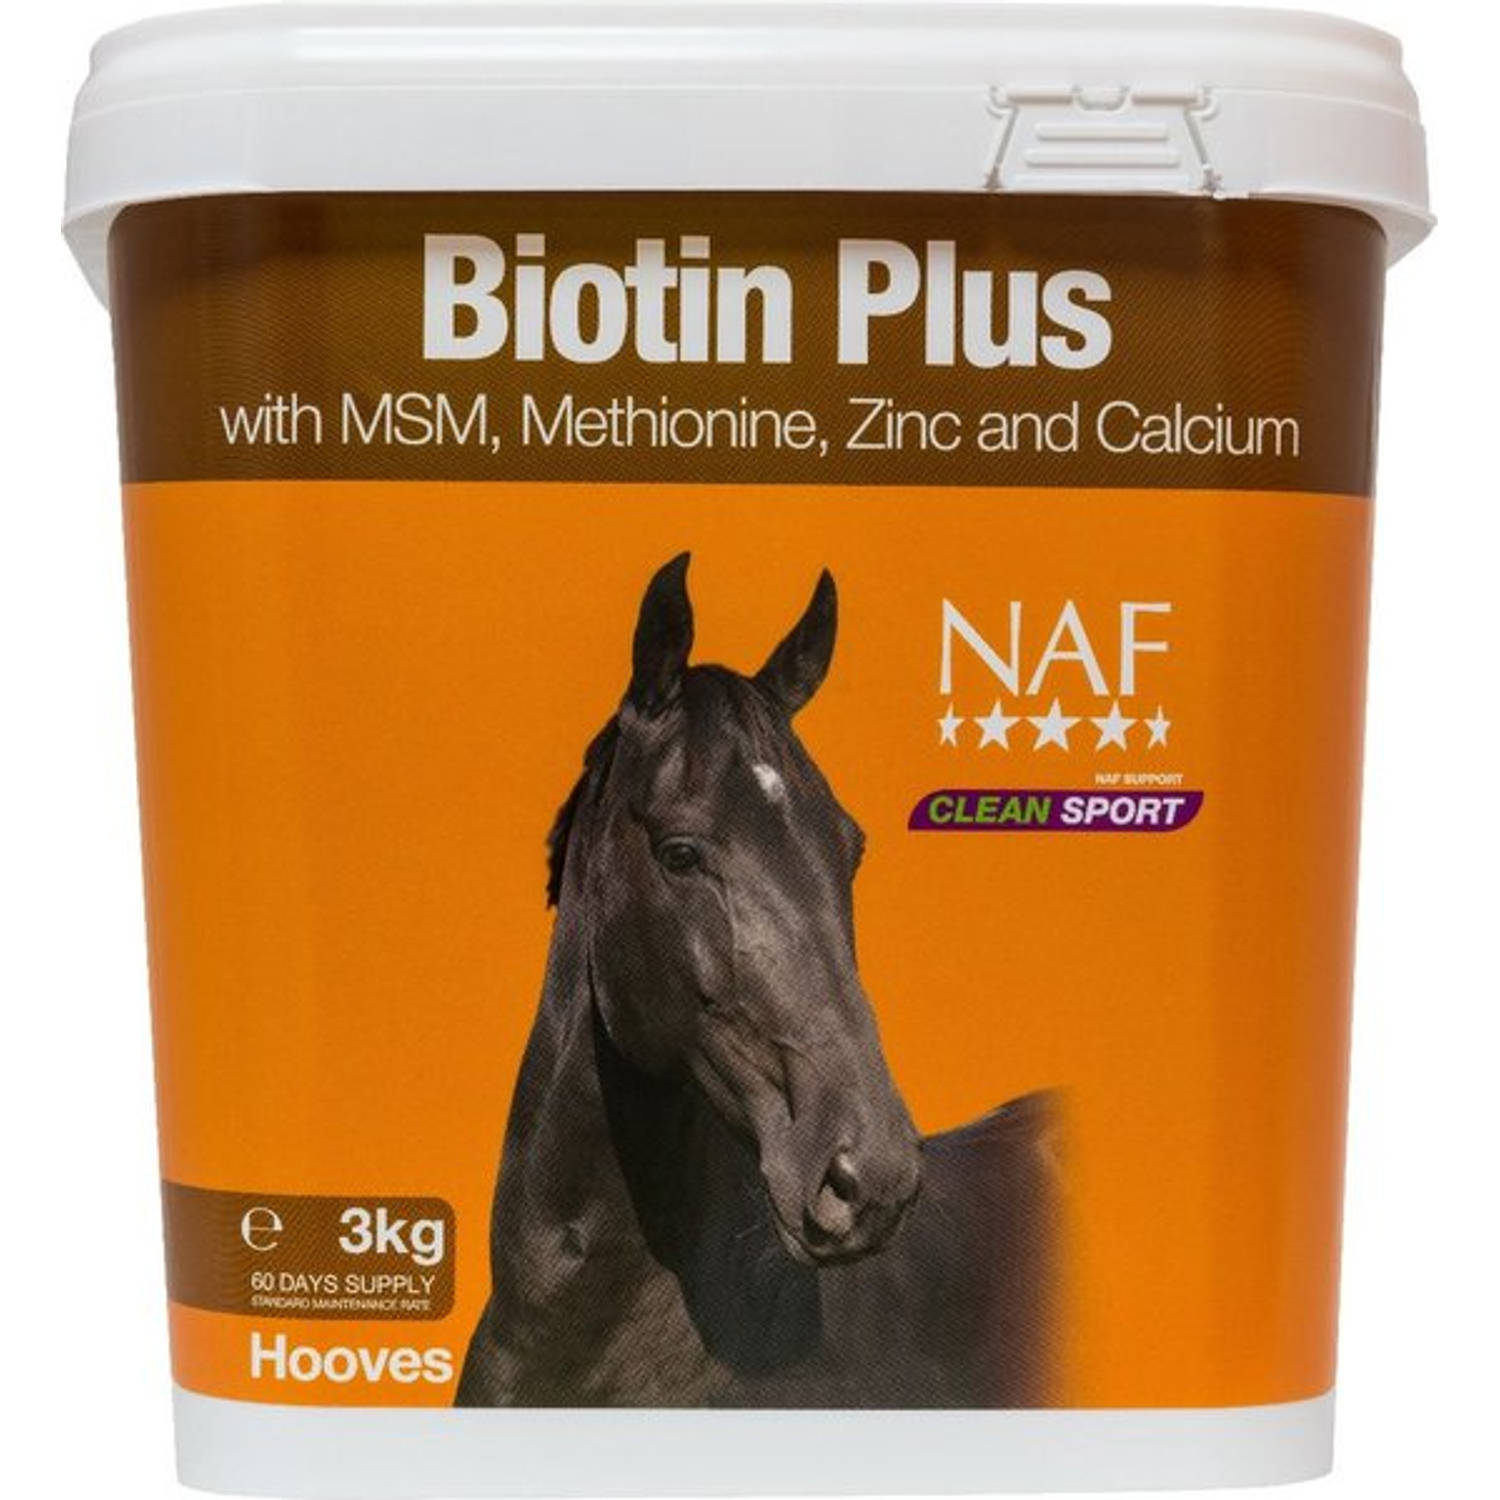 NAF - Biotine Plus - Ondersteuning van de Hoeven - 3 kg